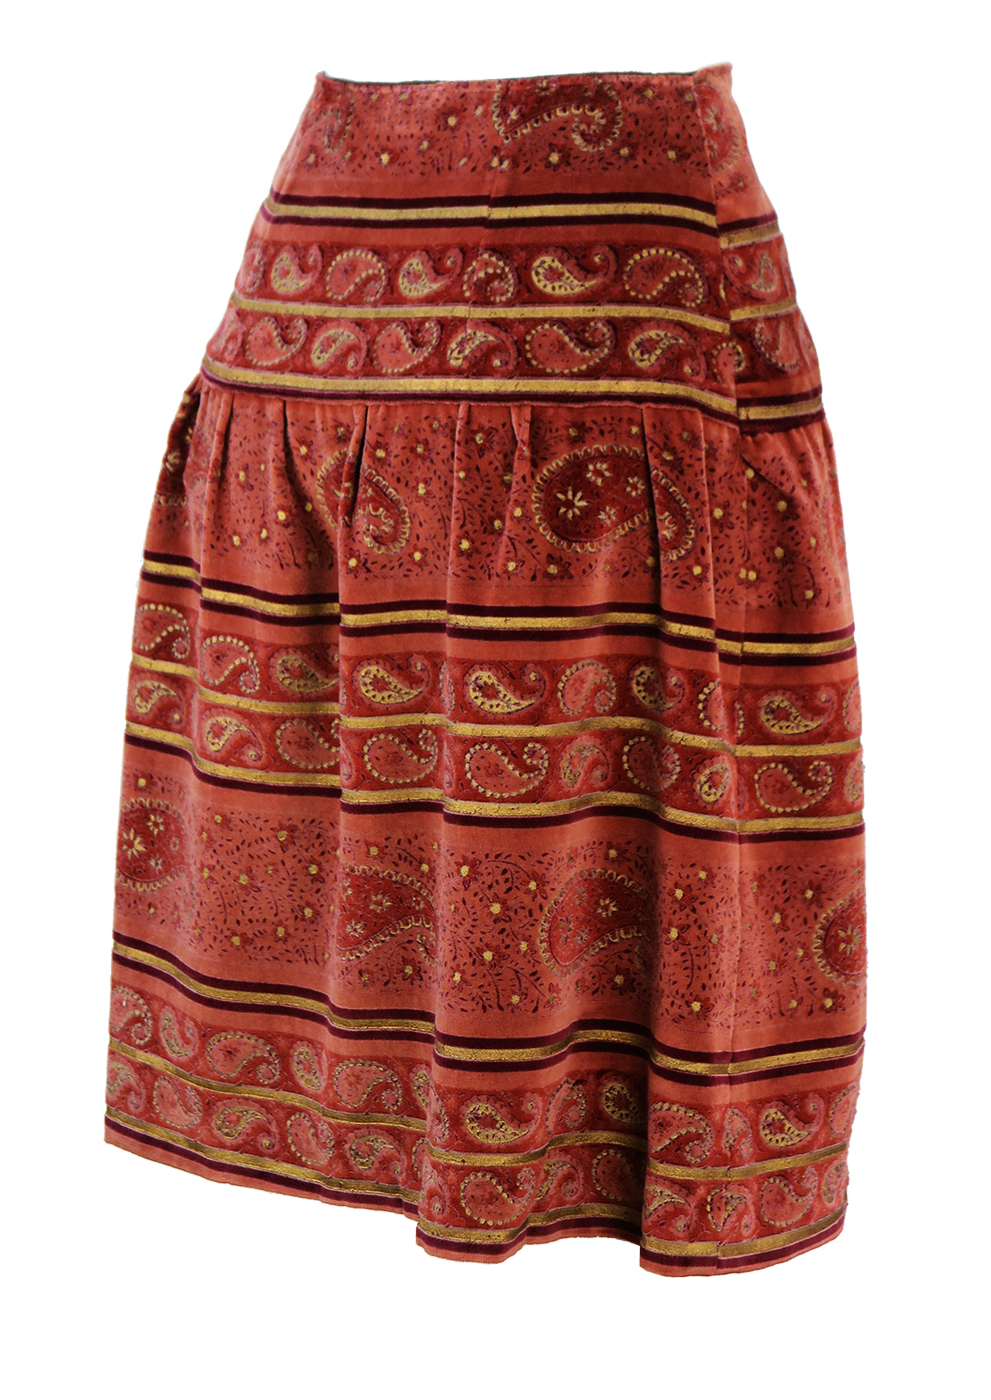 Coral Pink Velvet Knee Length Skirt with Metallic Gold Paisley Print ...